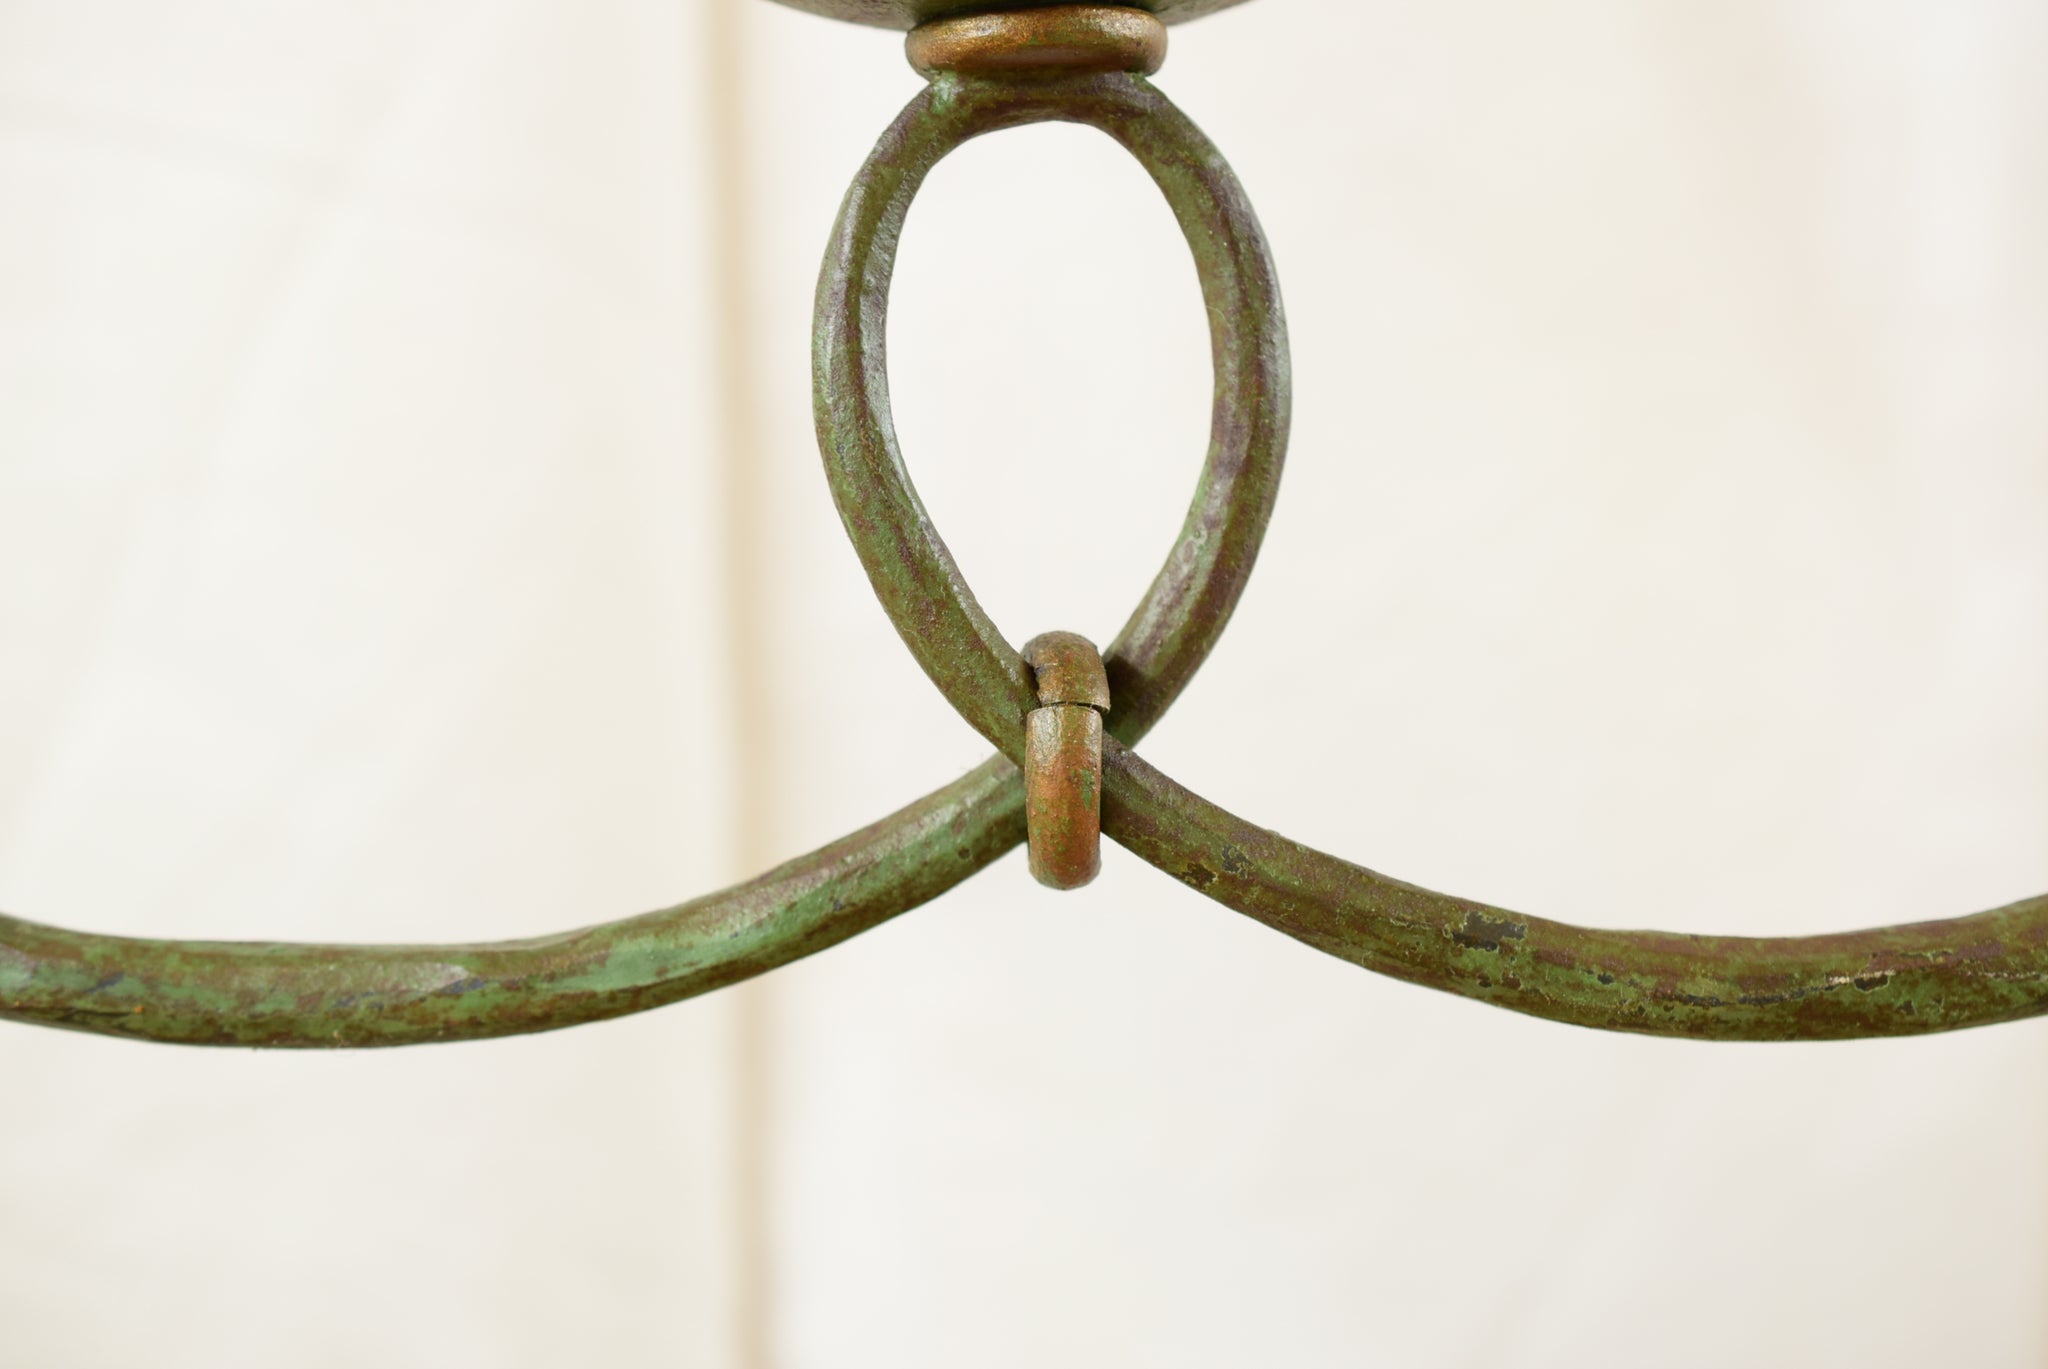 French Antique Wrought Iron Lantern Hanging Candle Holder Lamp